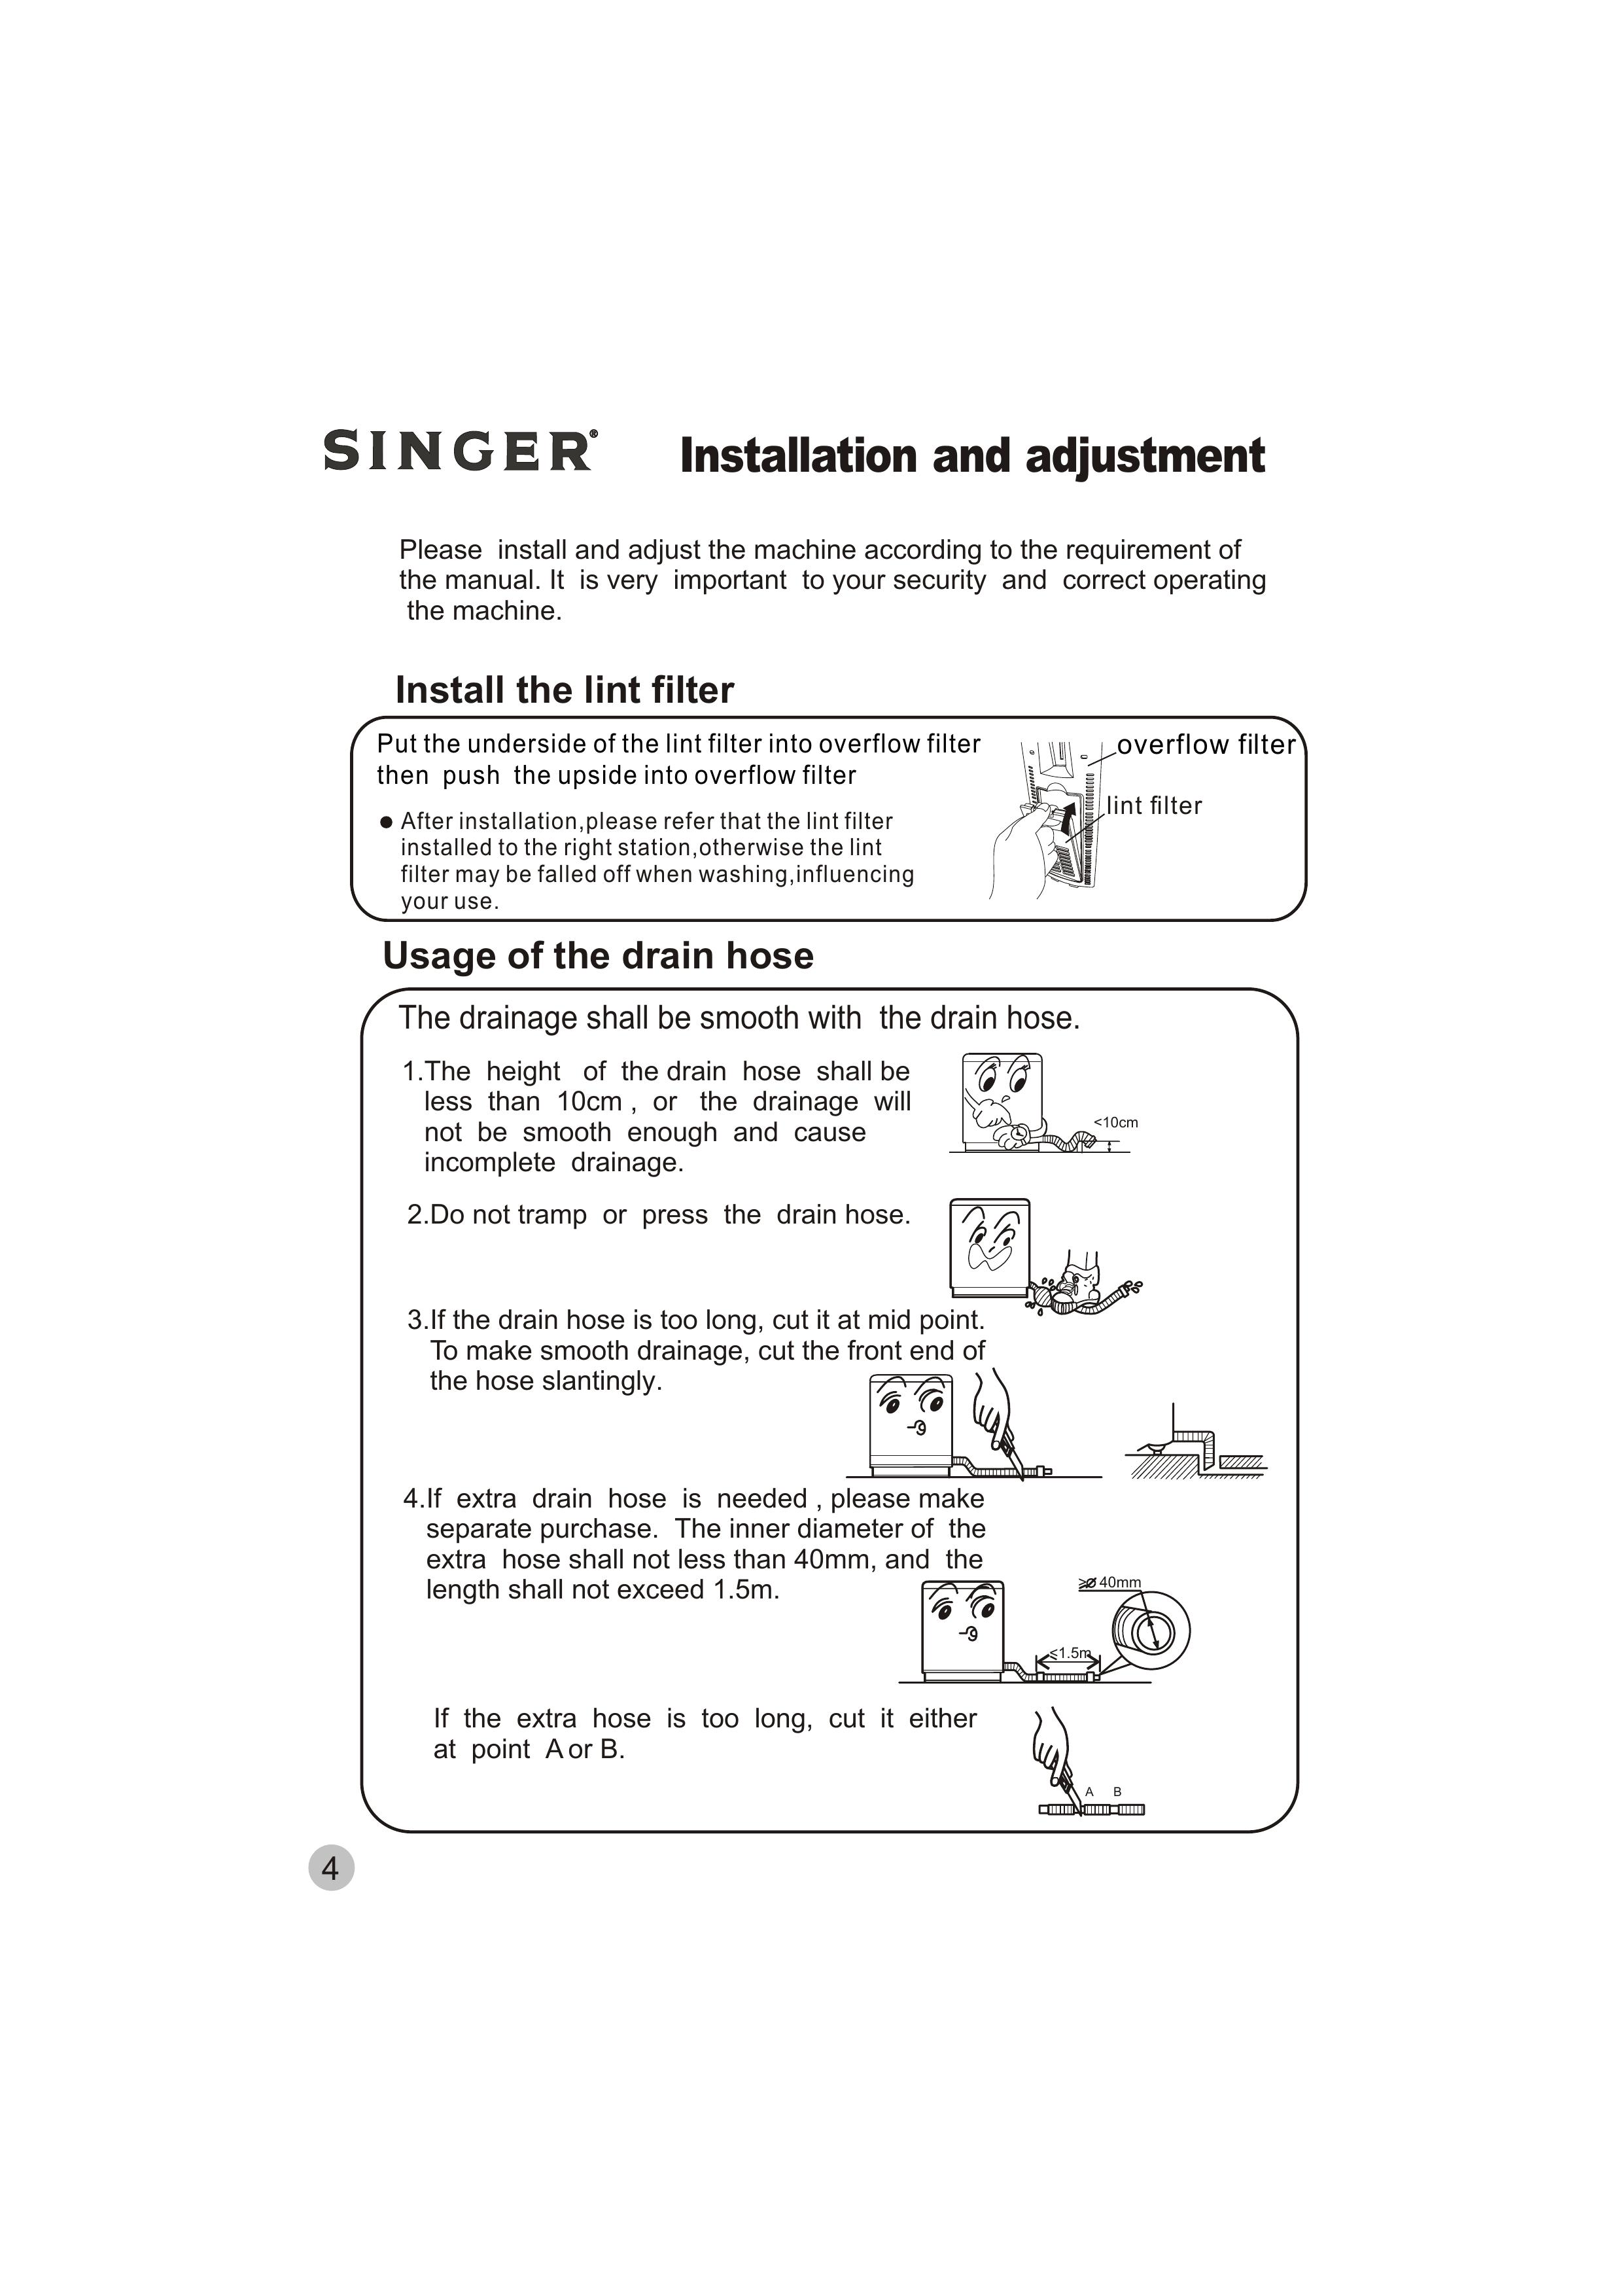 Singer WT5113 Washer/Dryer User Manual (Page 5)